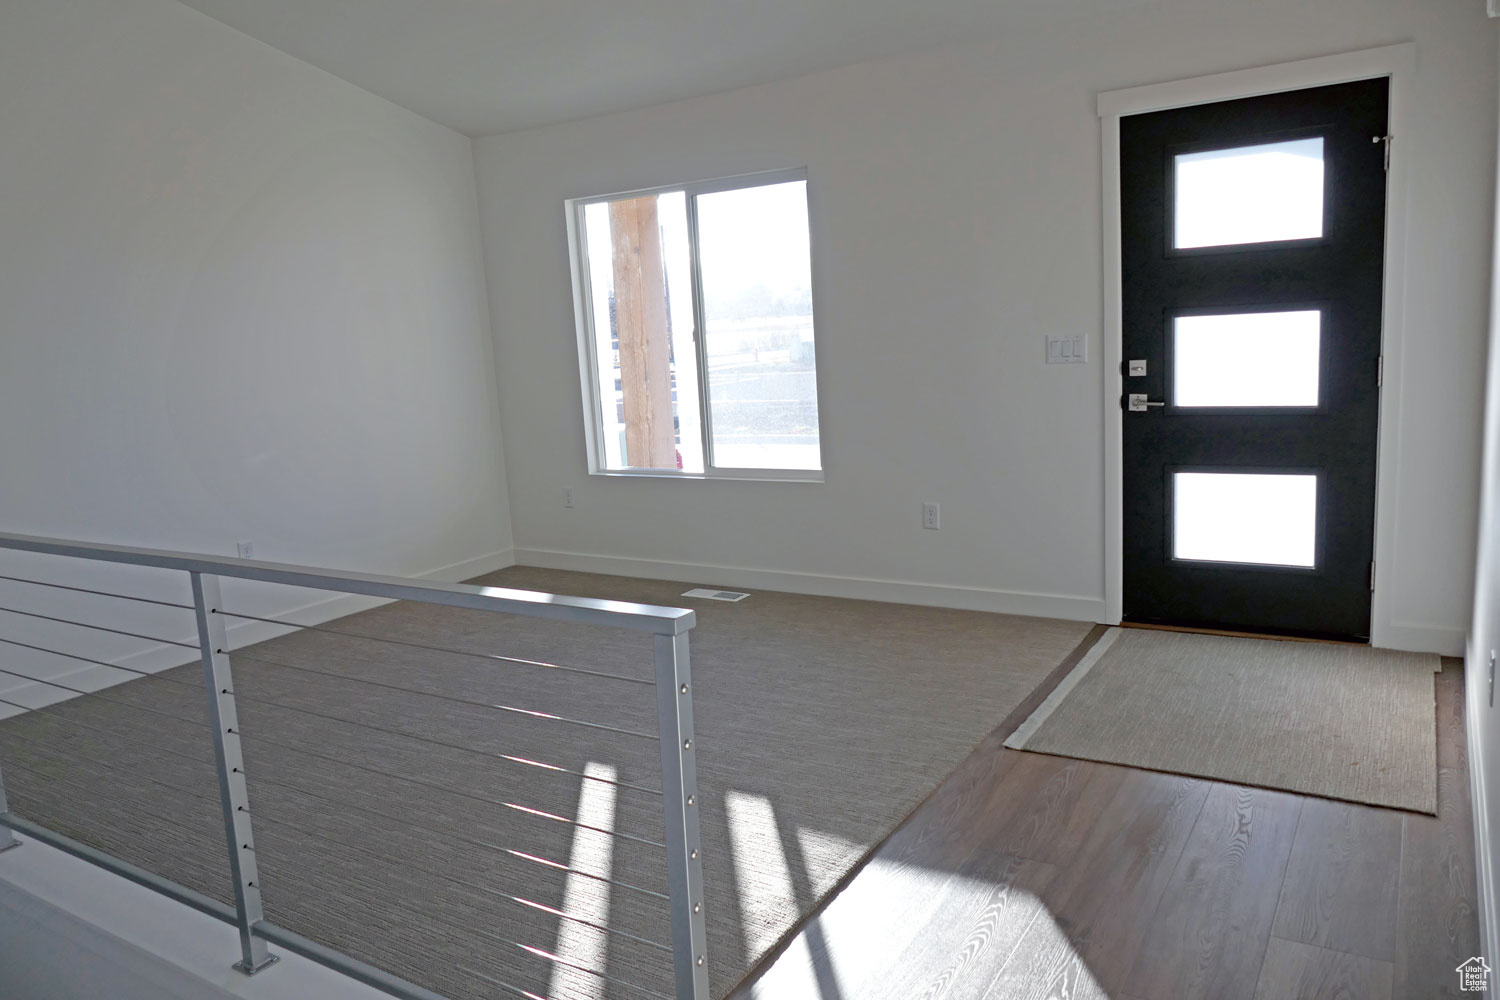 Entrance foyer with formal living room & light hardwood / wood-style flooring